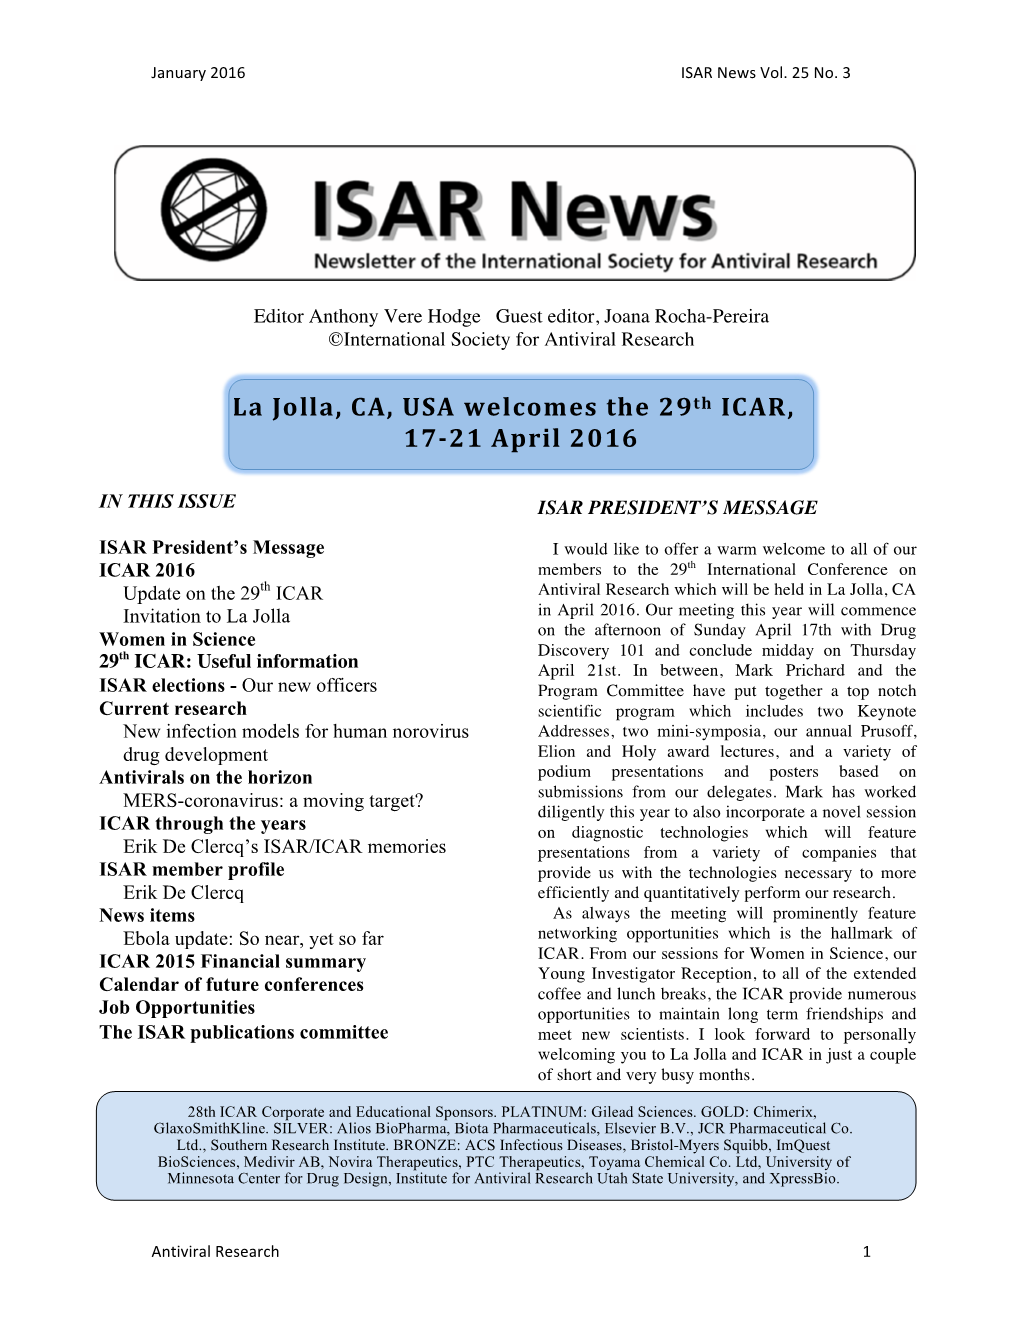 ISAR News 25.3 Final 25 Jan 16